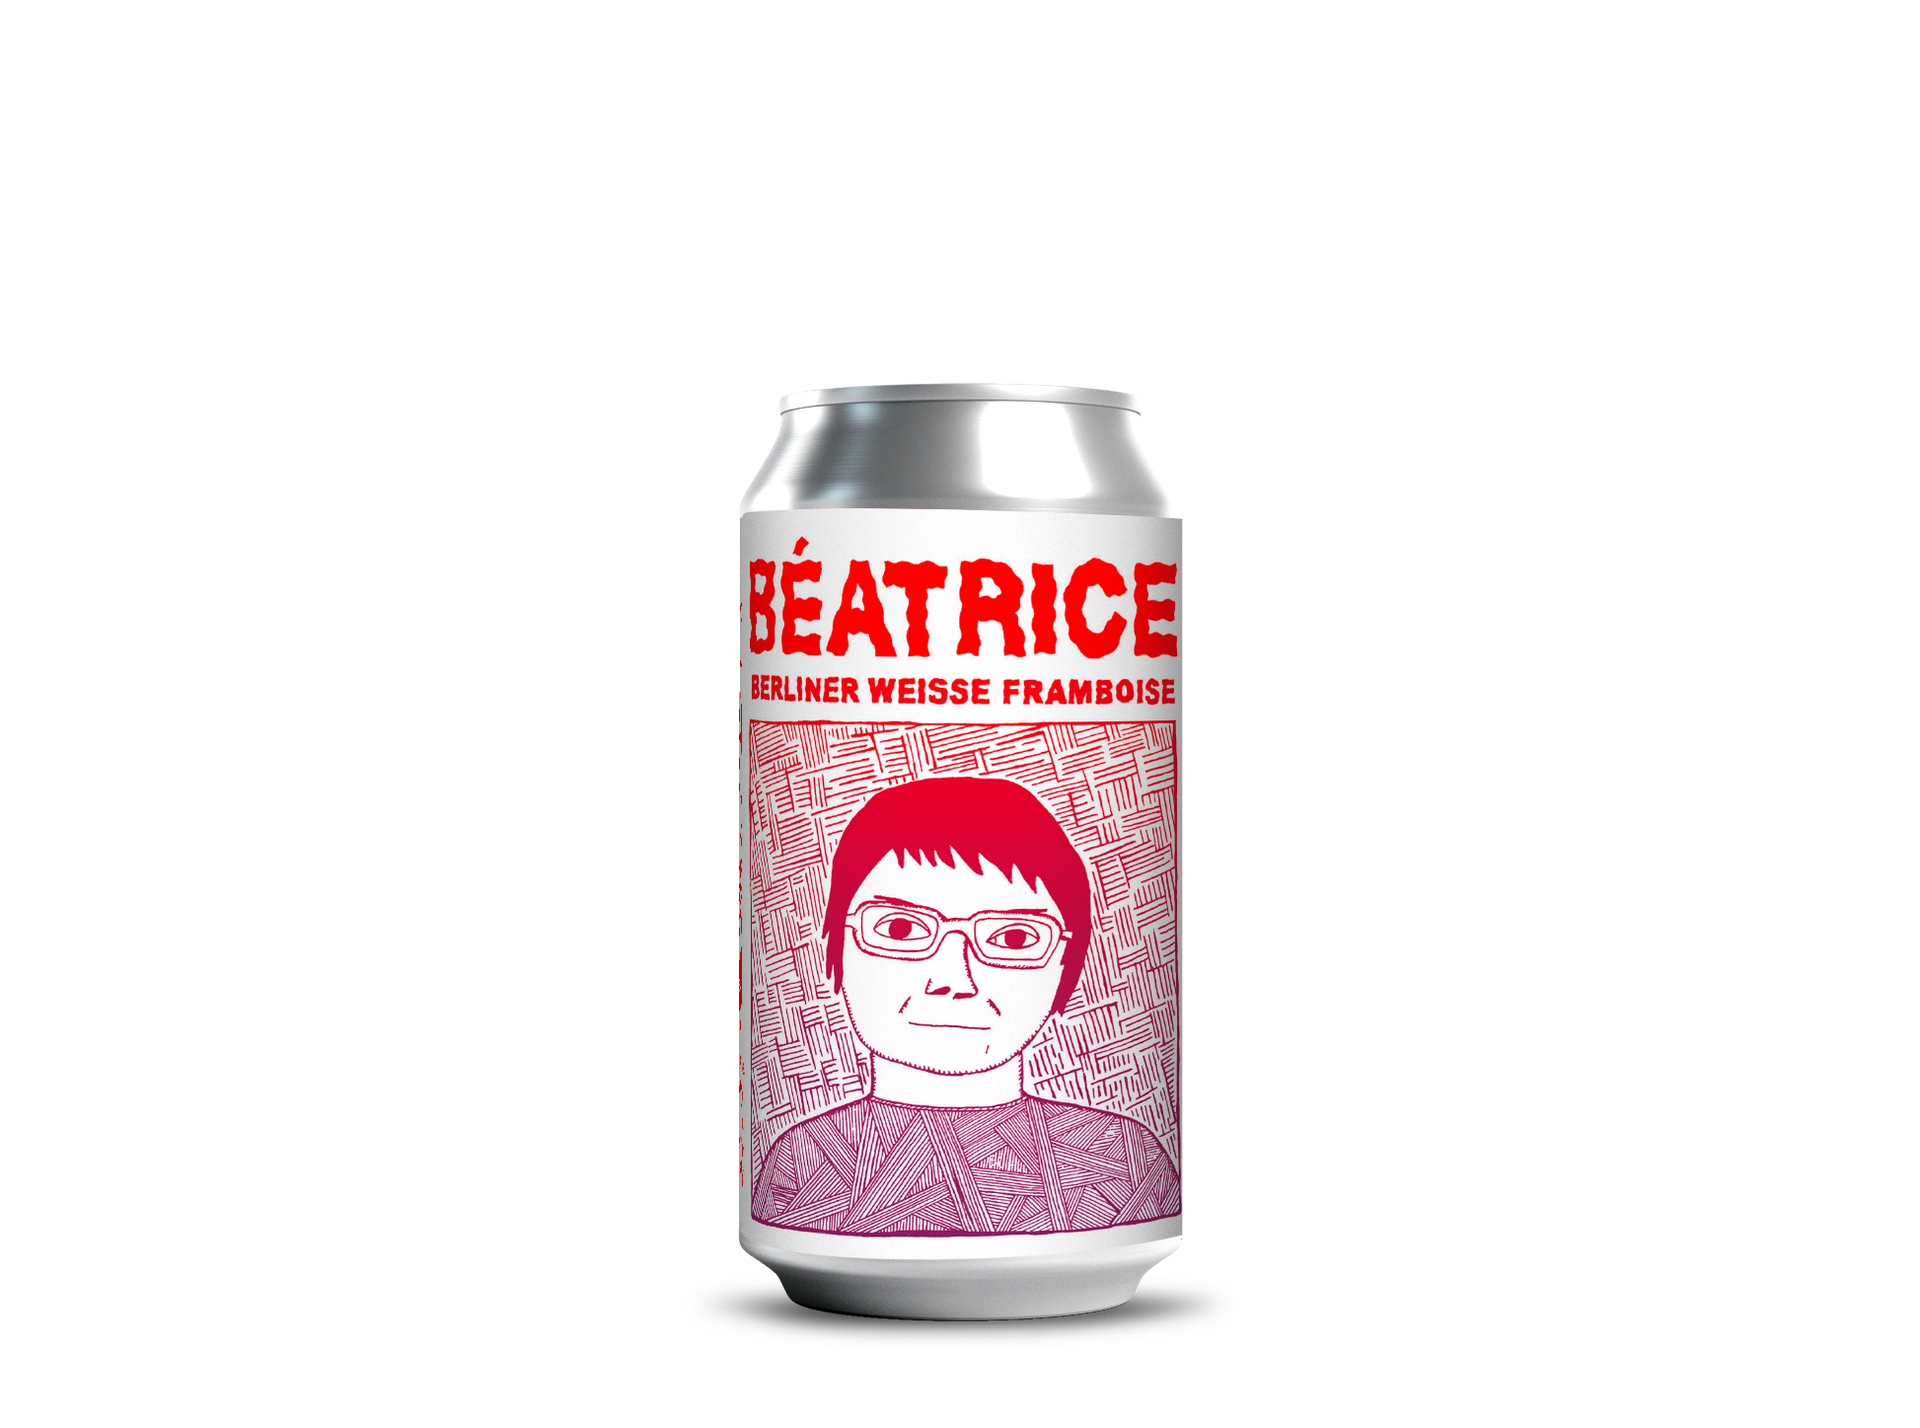 Beatrice-face